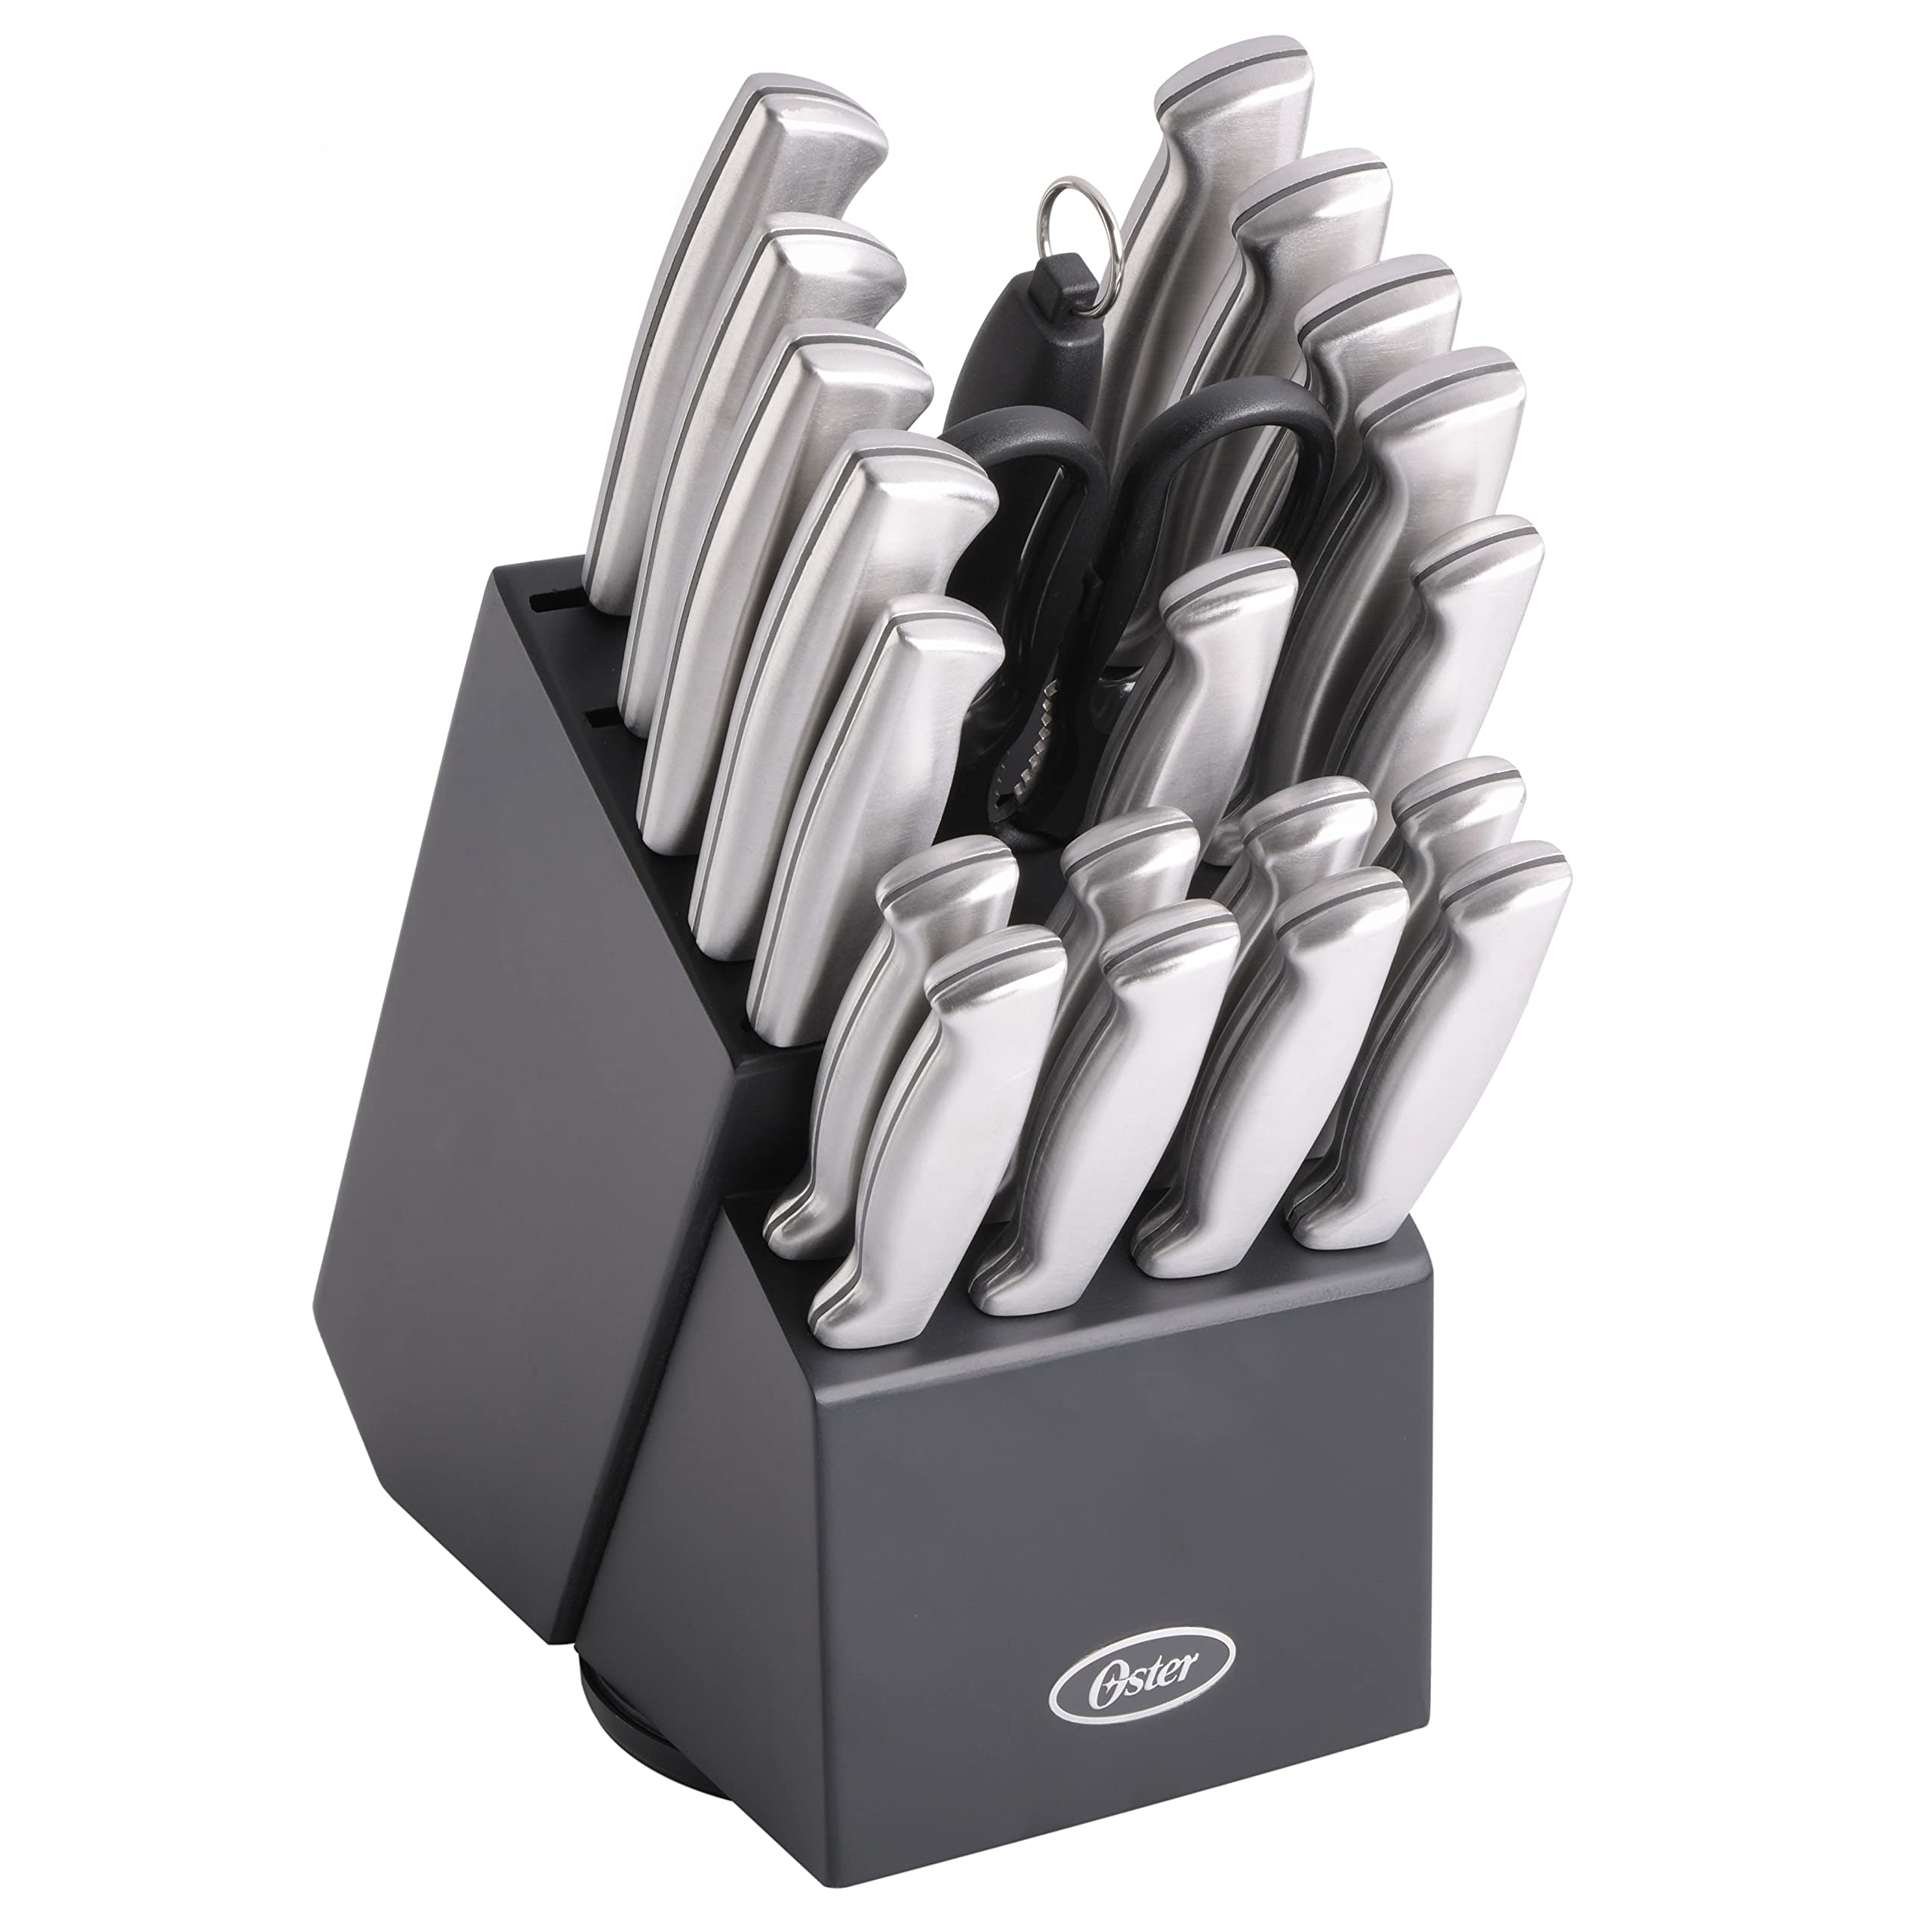 Oster Baldwyn High-Carbon Stainless Steel Kitchen Knife Cutlery Block Set, 22-Piece, Brushed Satin